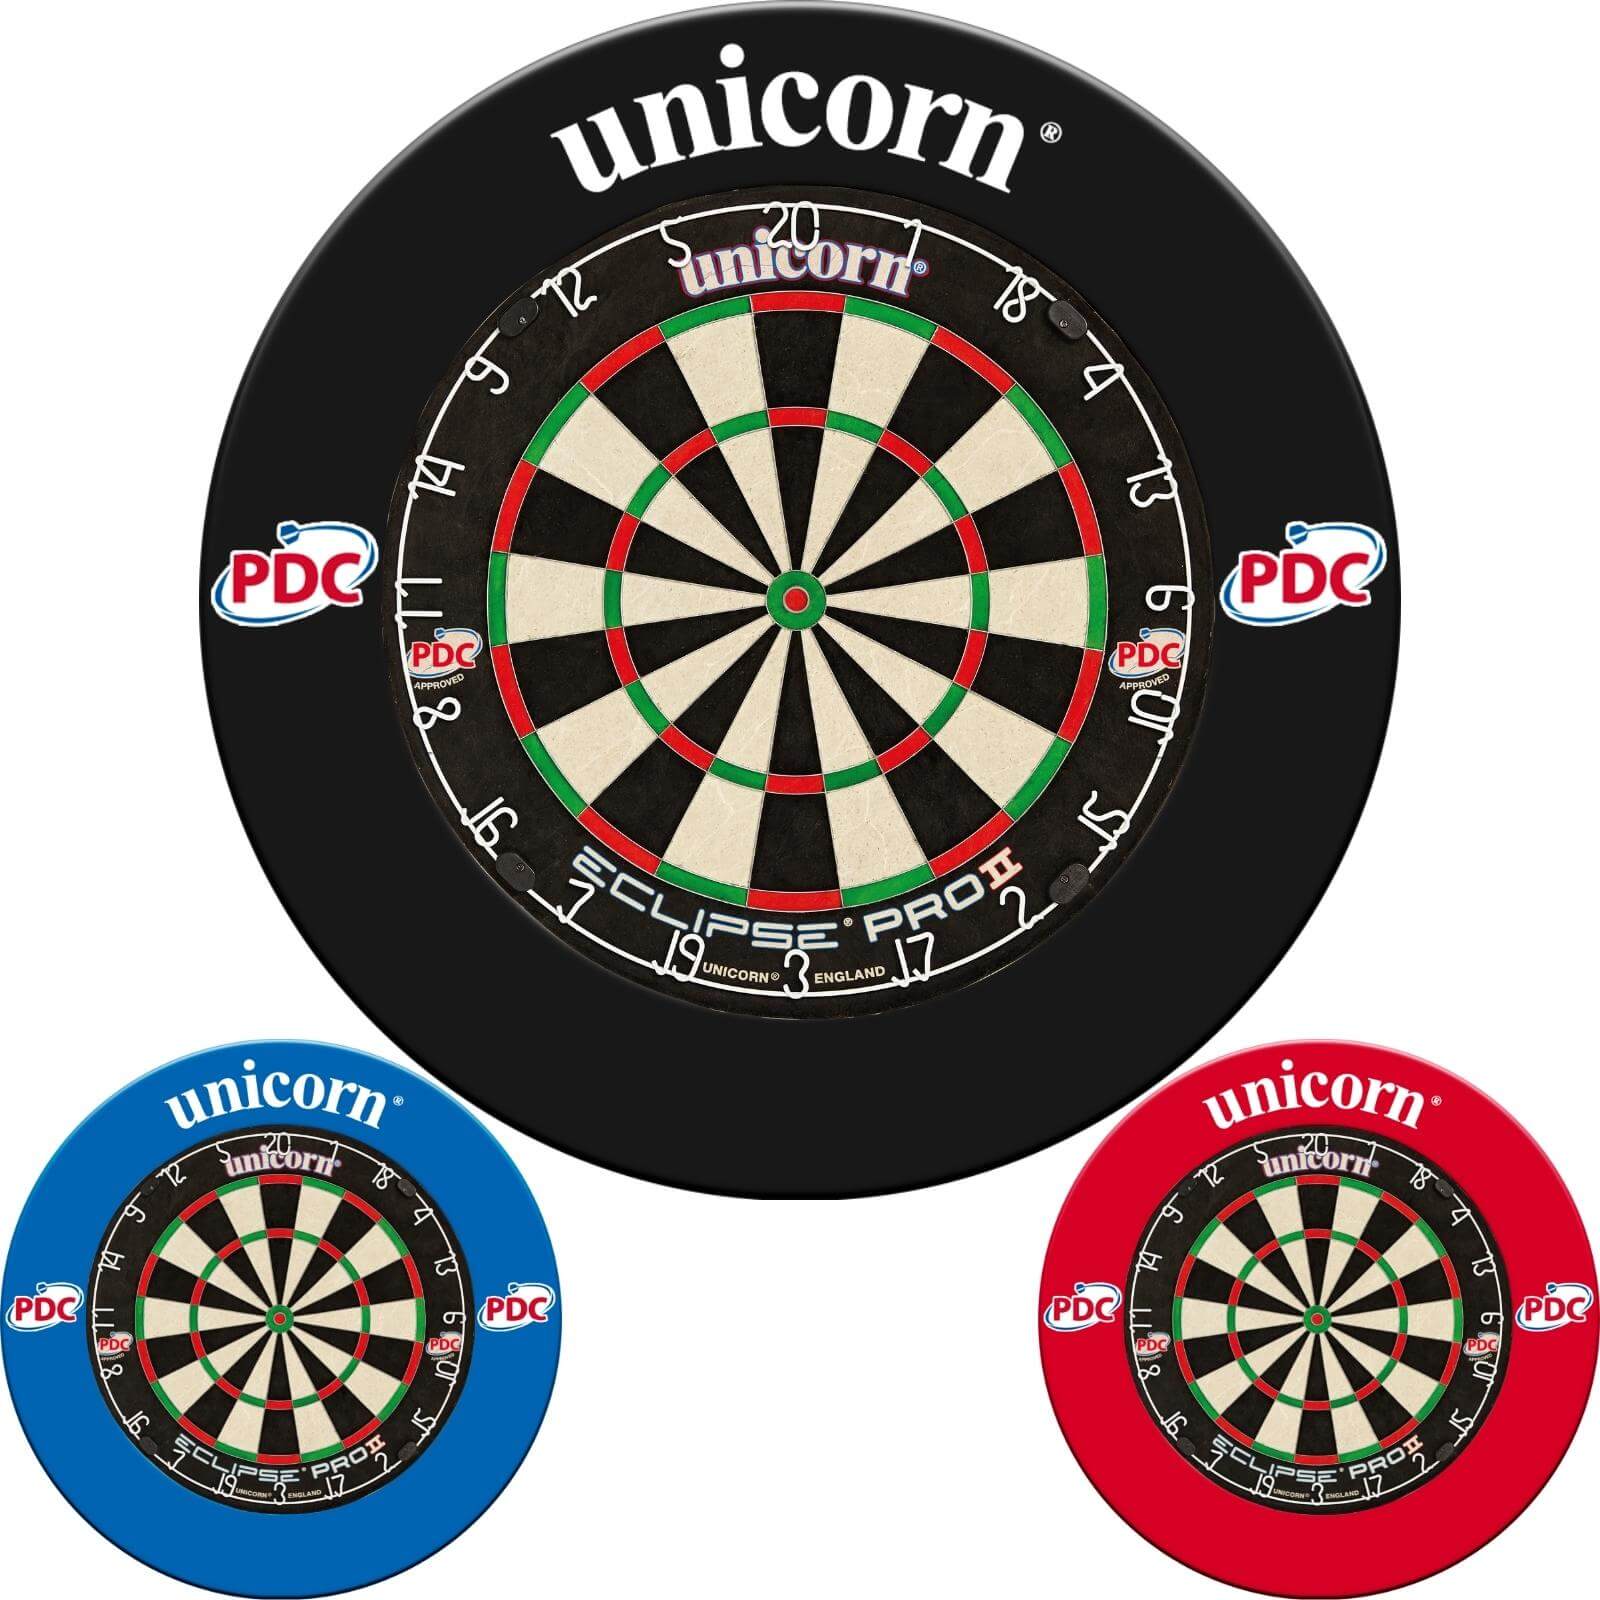 Dartboards - Unicorn - Eclipse Pro 2 Dartboard & Surround Package 